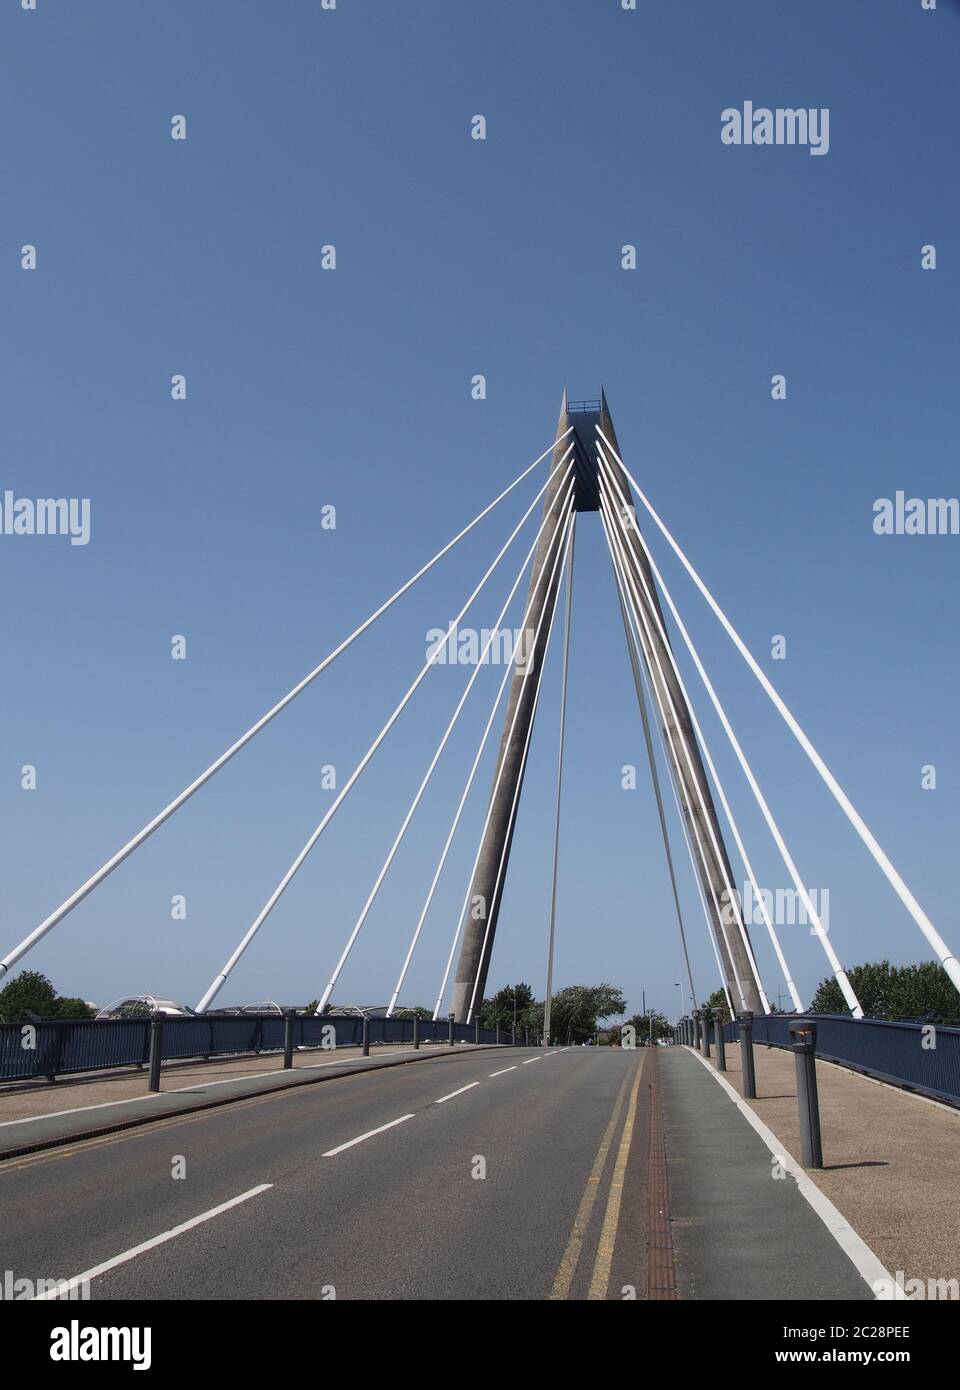 una vista sul ponte sospeso a southport merseyside contro un cielo blu Foto Stock